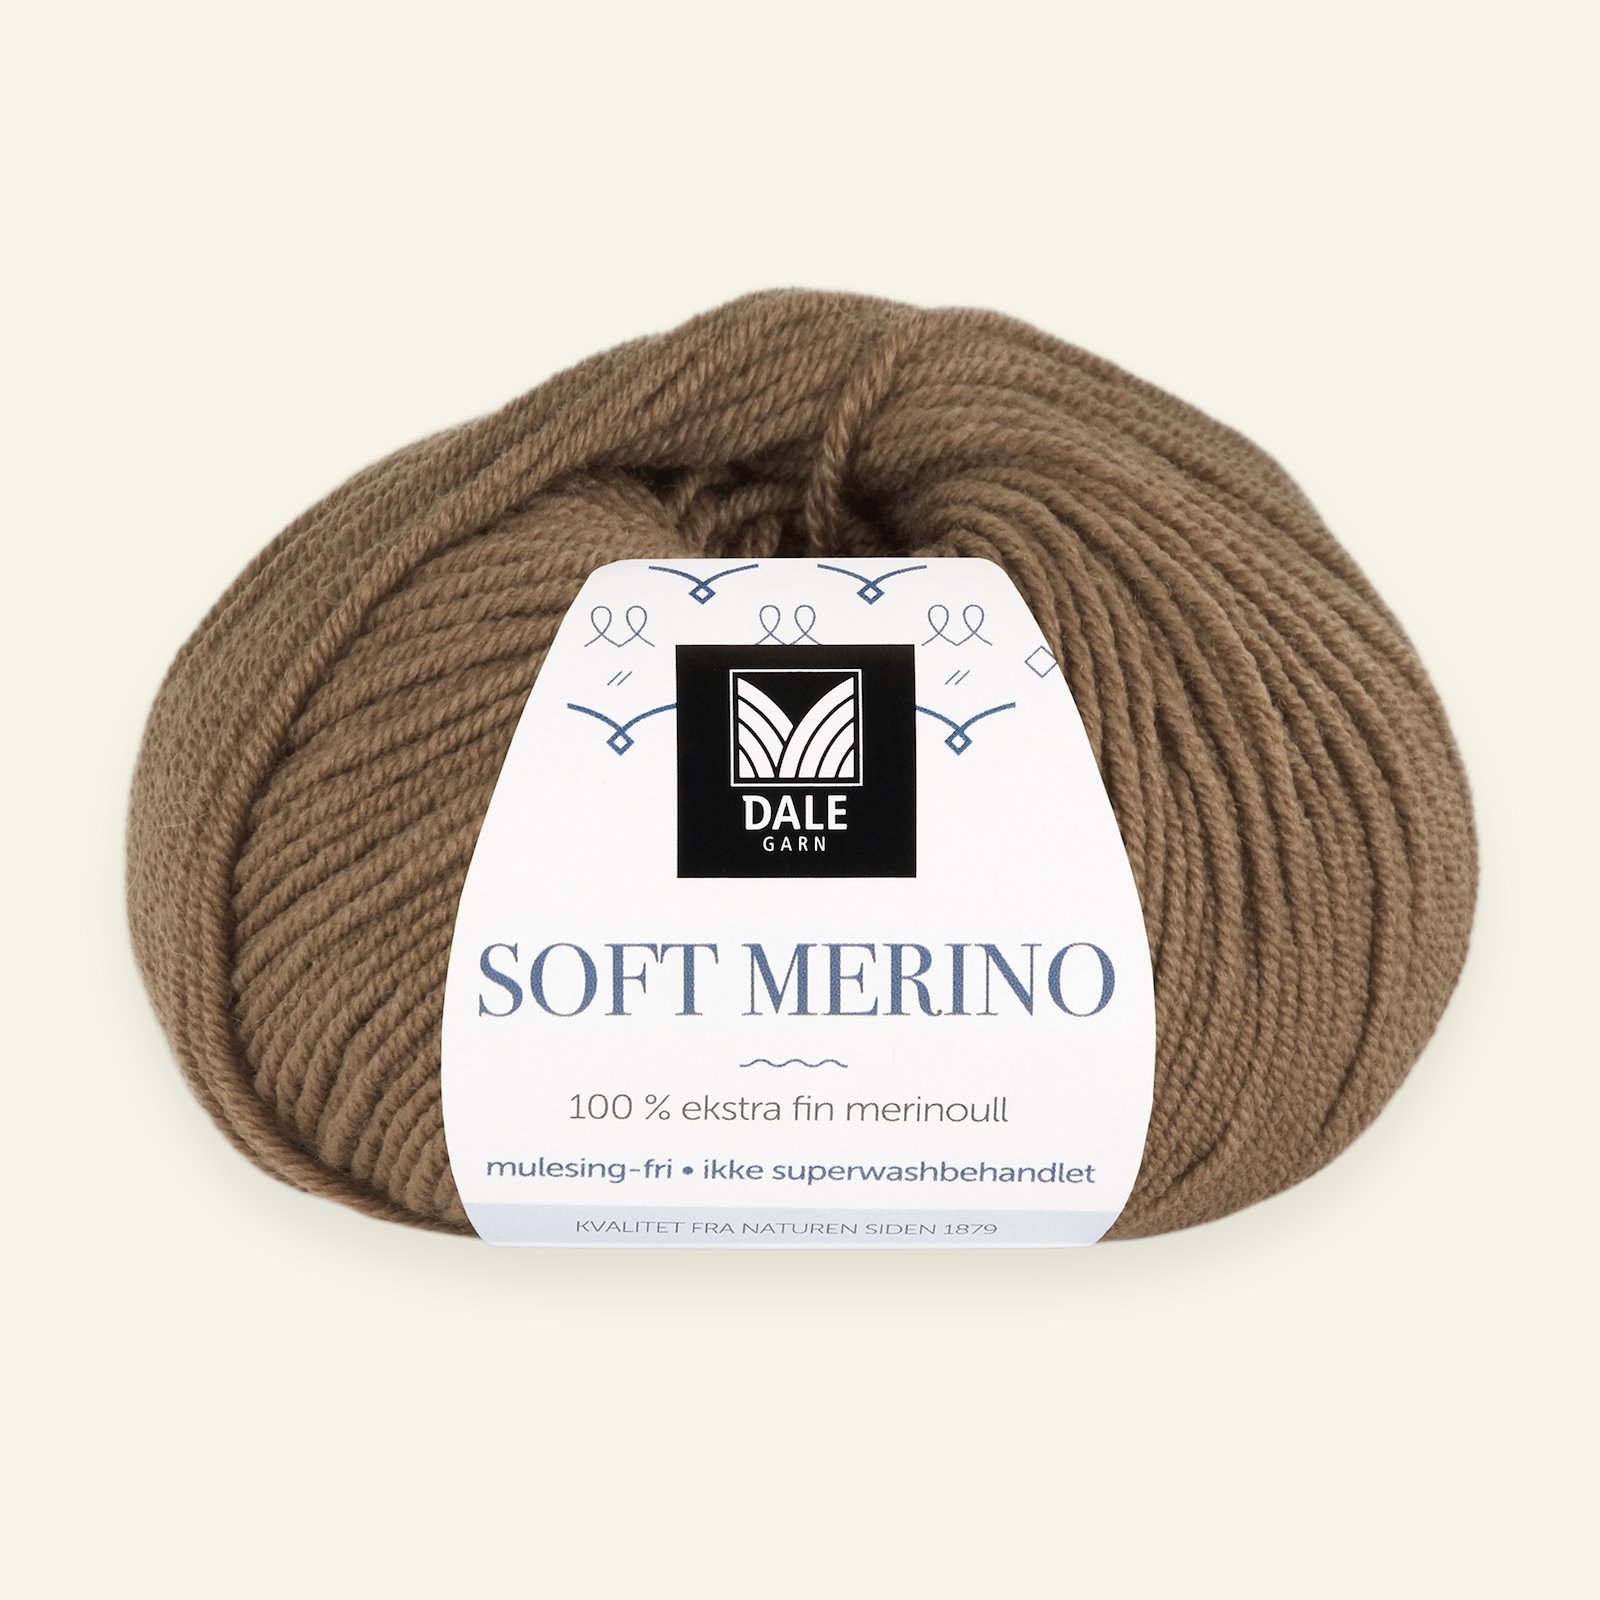 Dale Garn, 100% extra fine merino wool yarn, "Soft Merino", nutbrown (3038) 90000359_pack